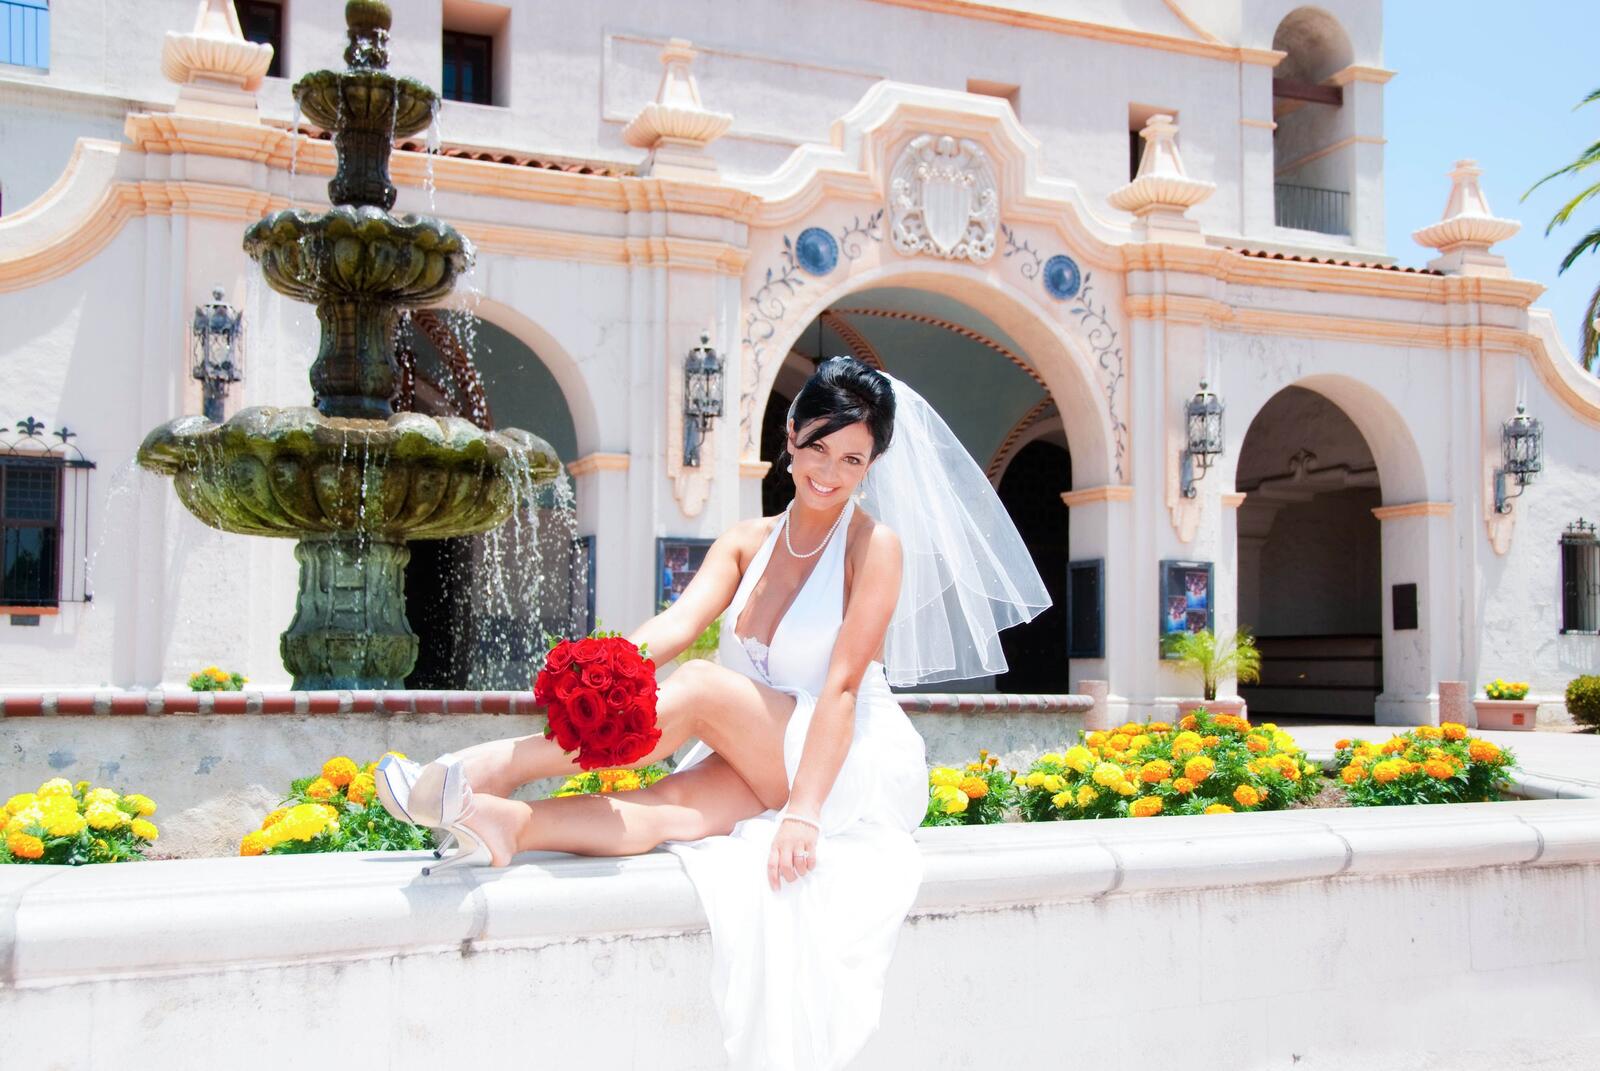 Free photo Denise Milani in a wedding dress